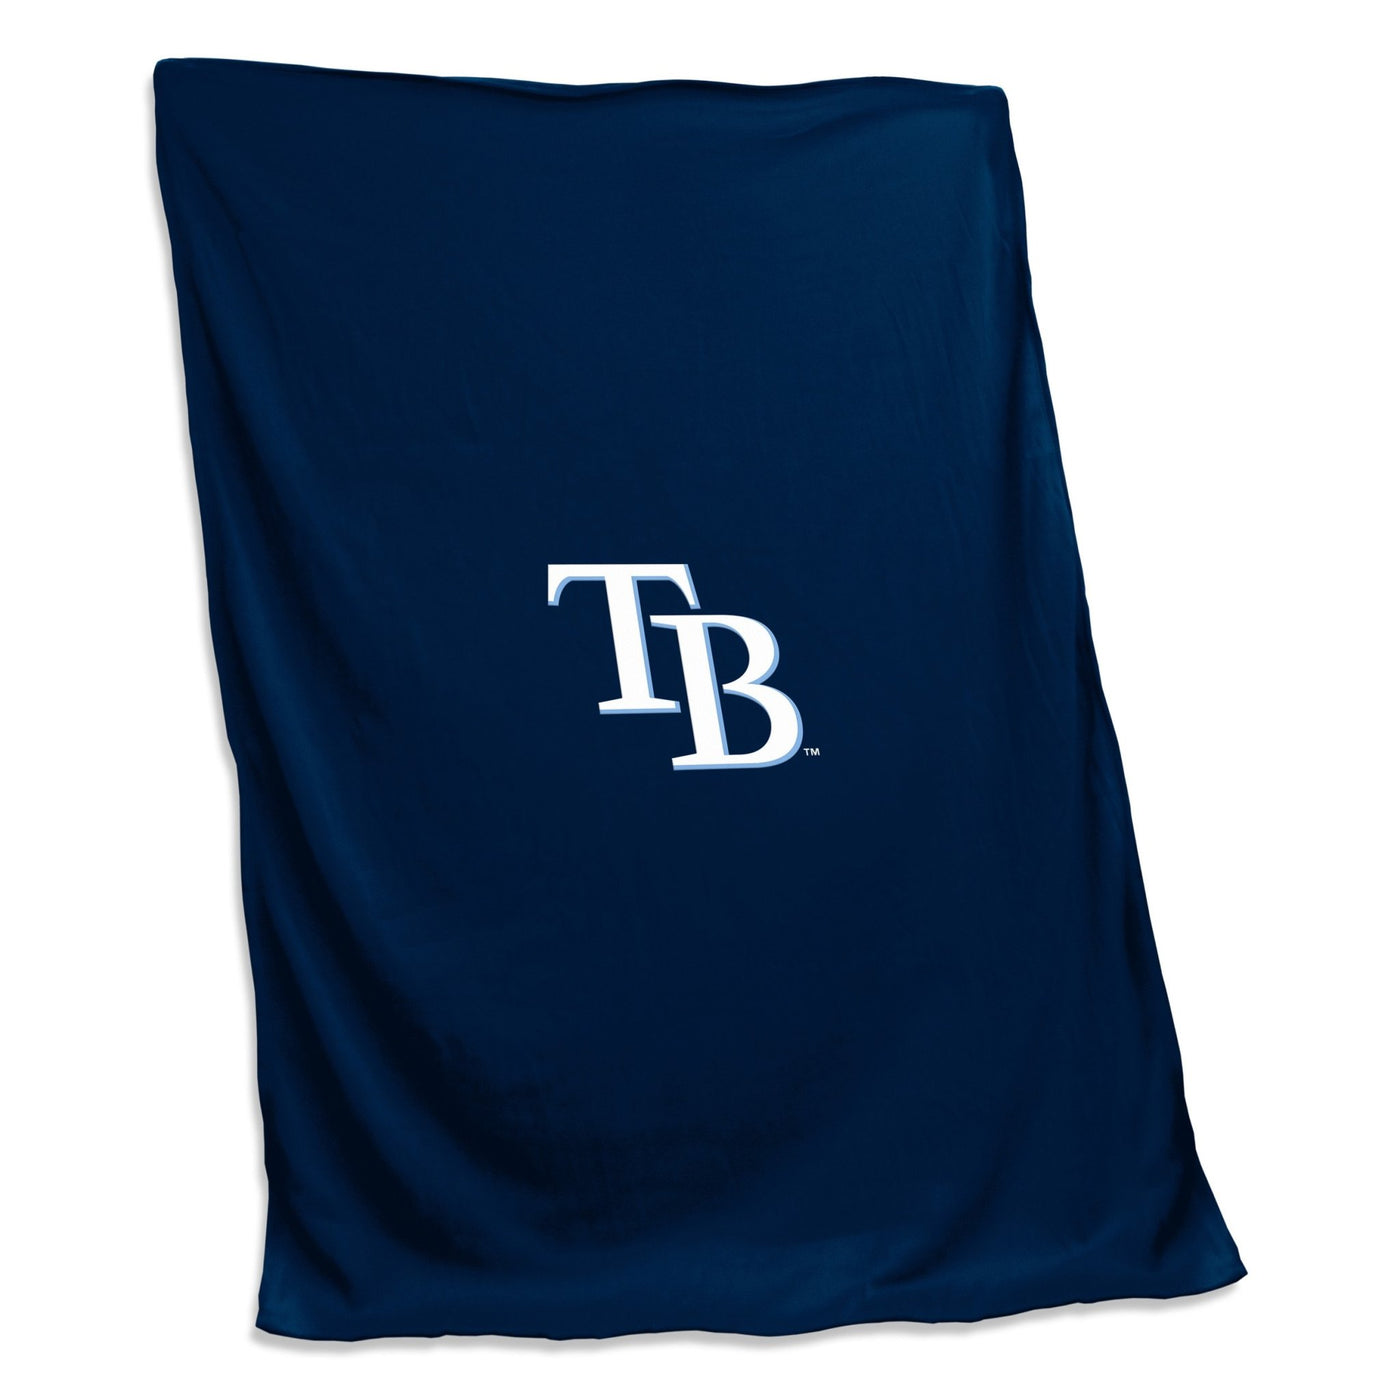 TB Rays Sweatshirt Blanket - Logo Brands